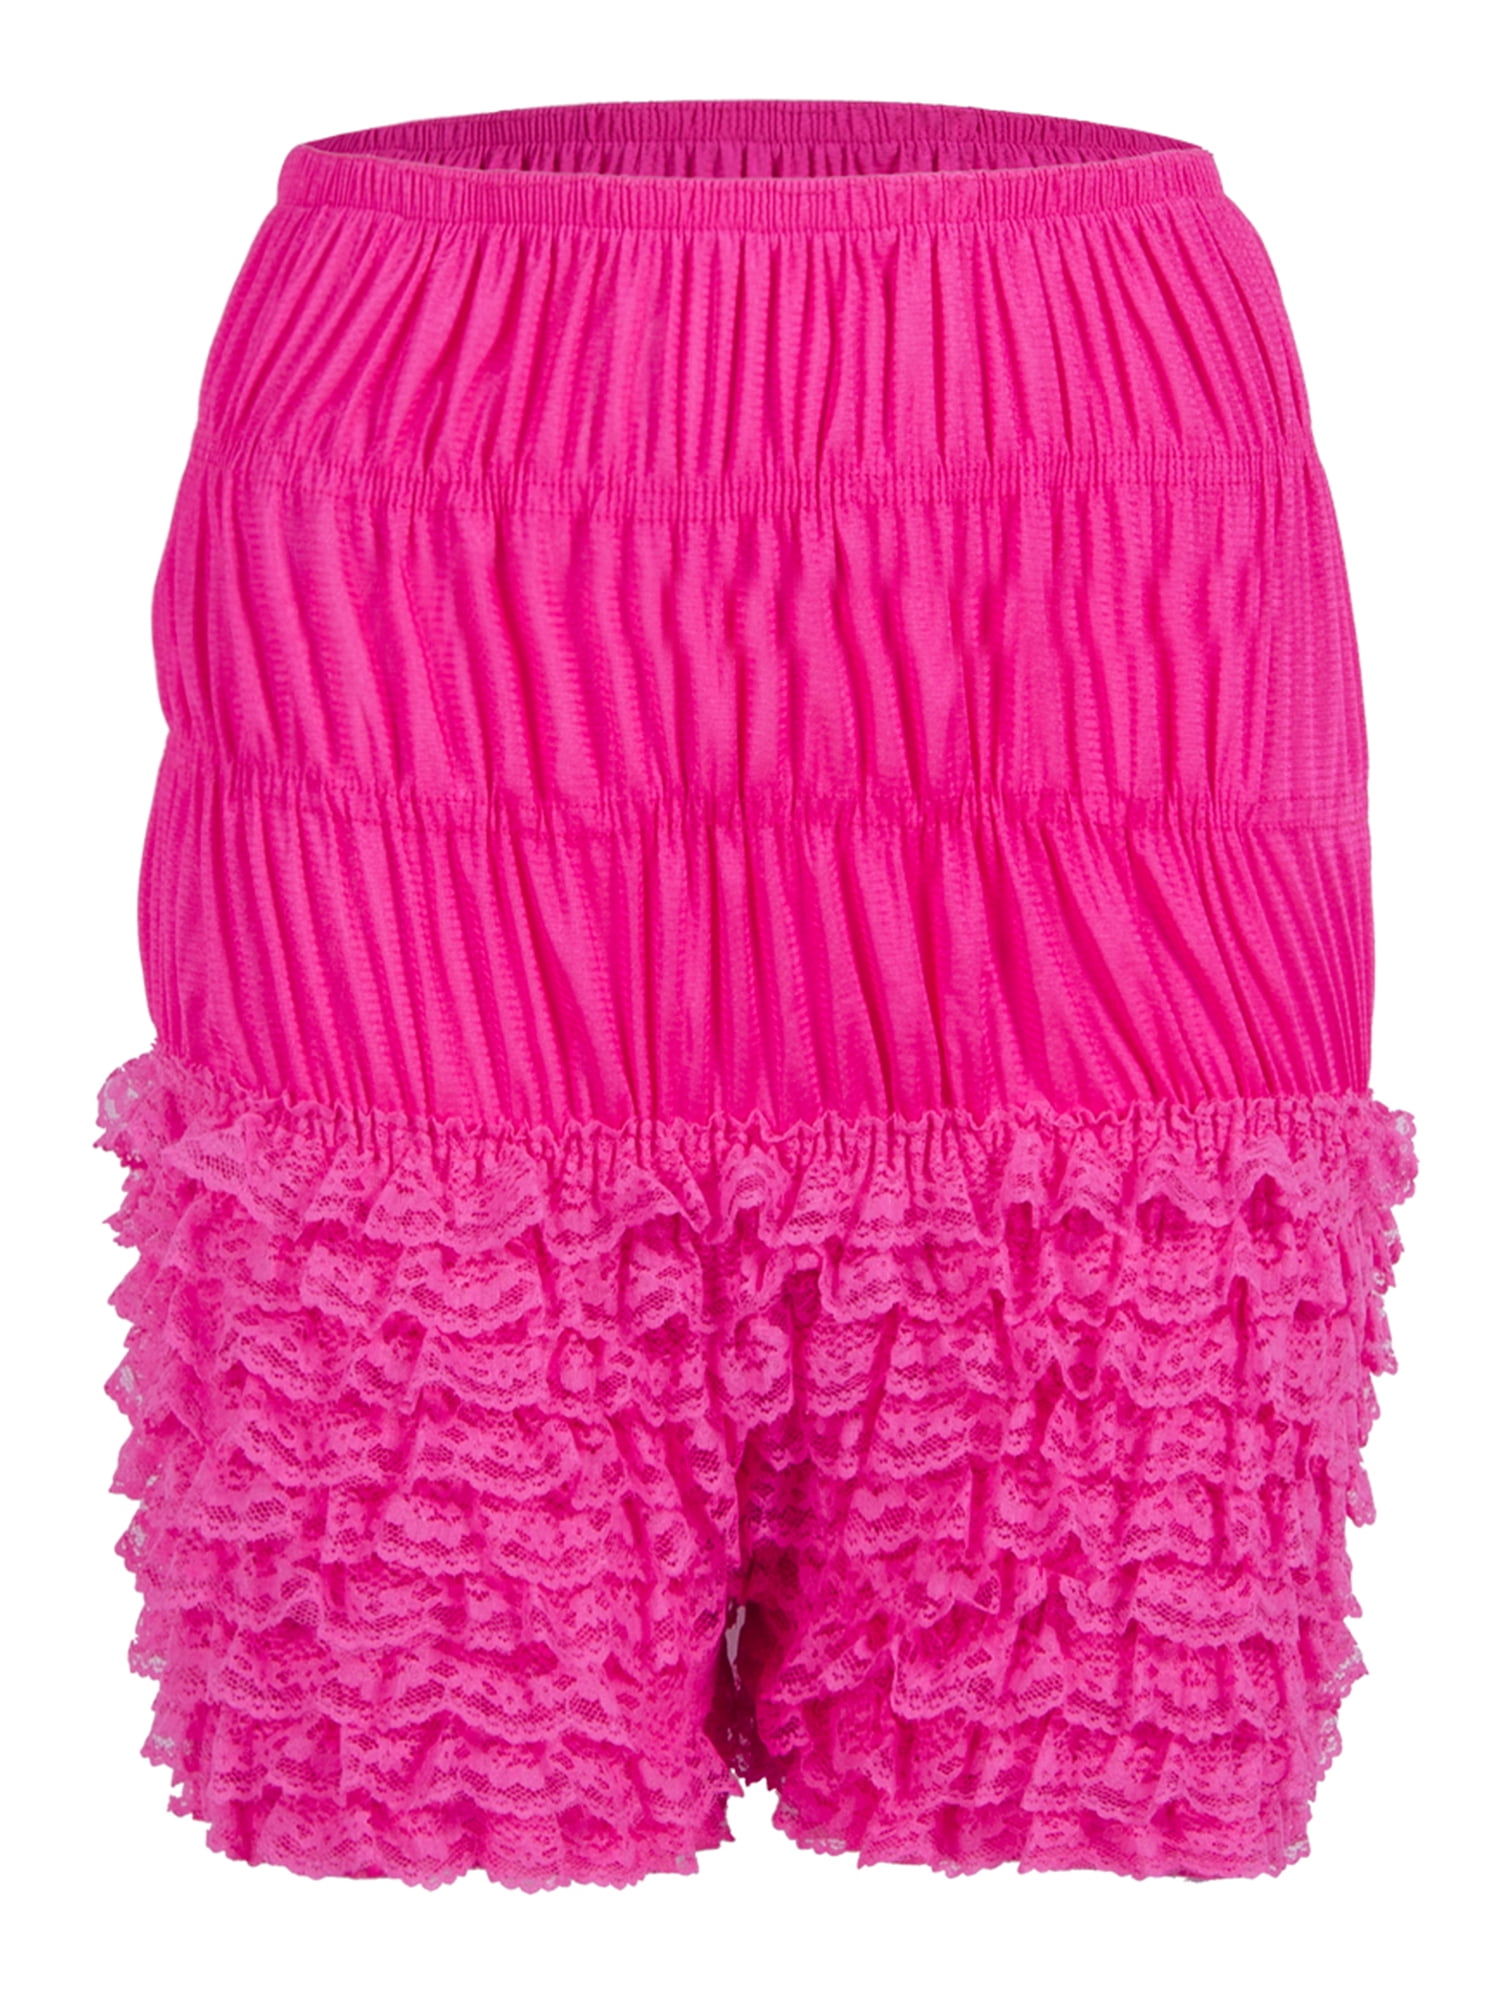 Pudcoco Women Girl Lace Ruffle Underwear Frilly Knicker Shorts ...